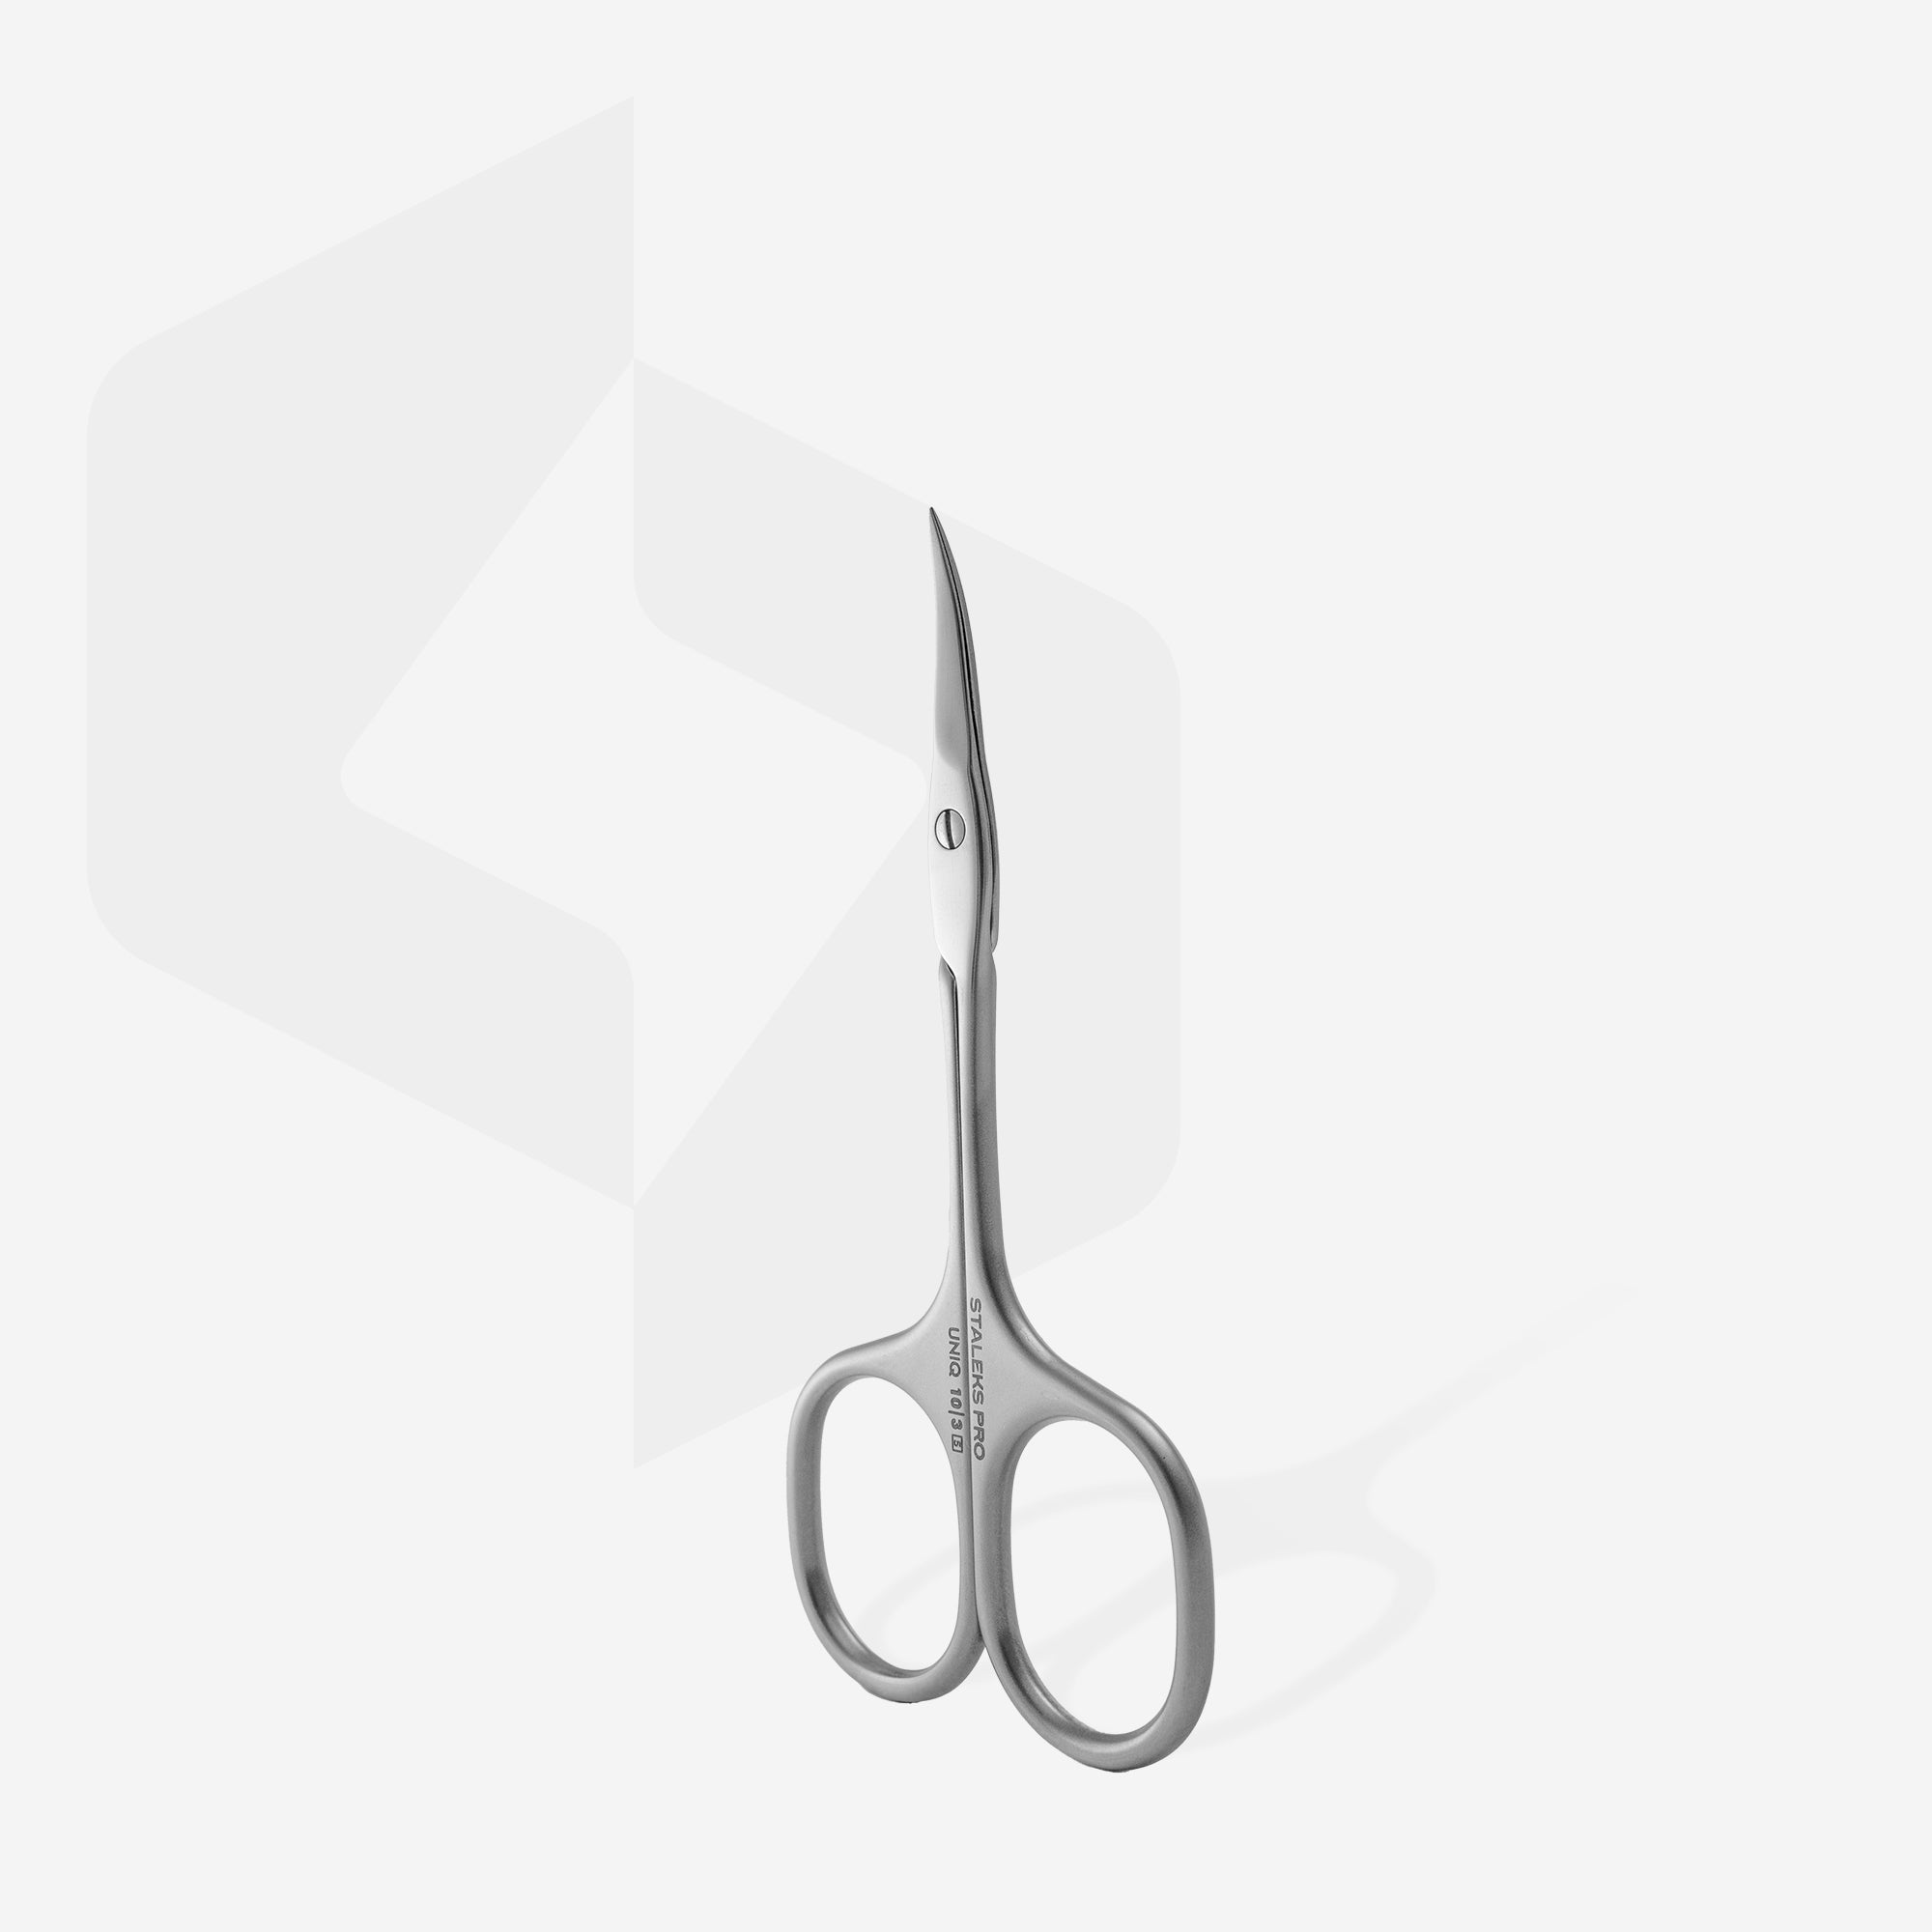 Staleks Classic 32 Type 1 Nail Scissors for Kids SC-32/1 –